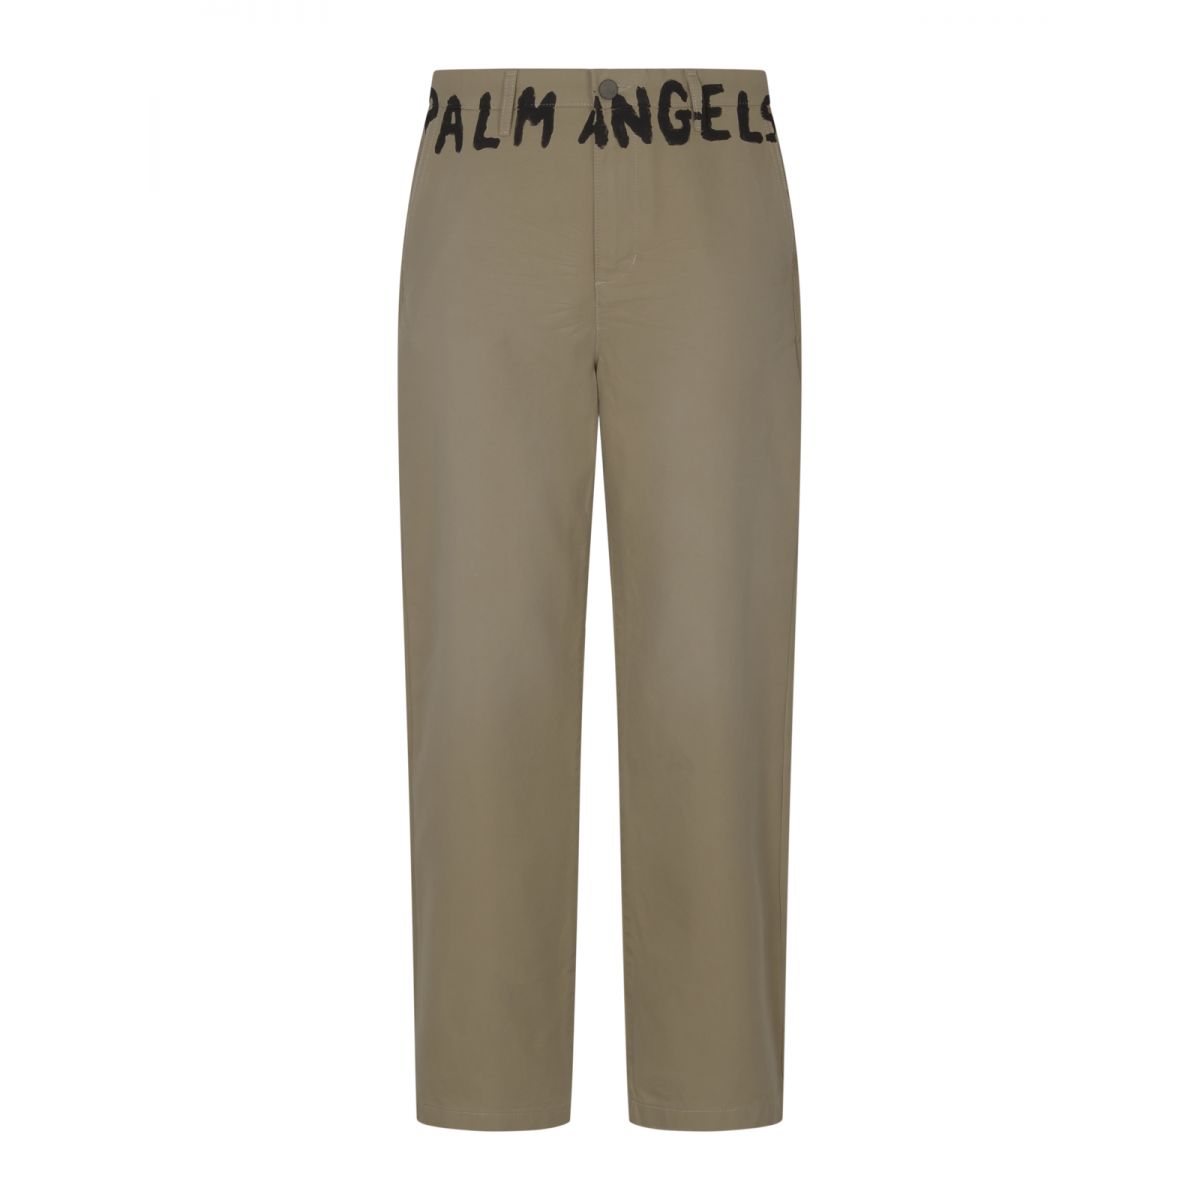 PALM ANGELS - Logo-print Chino trousers